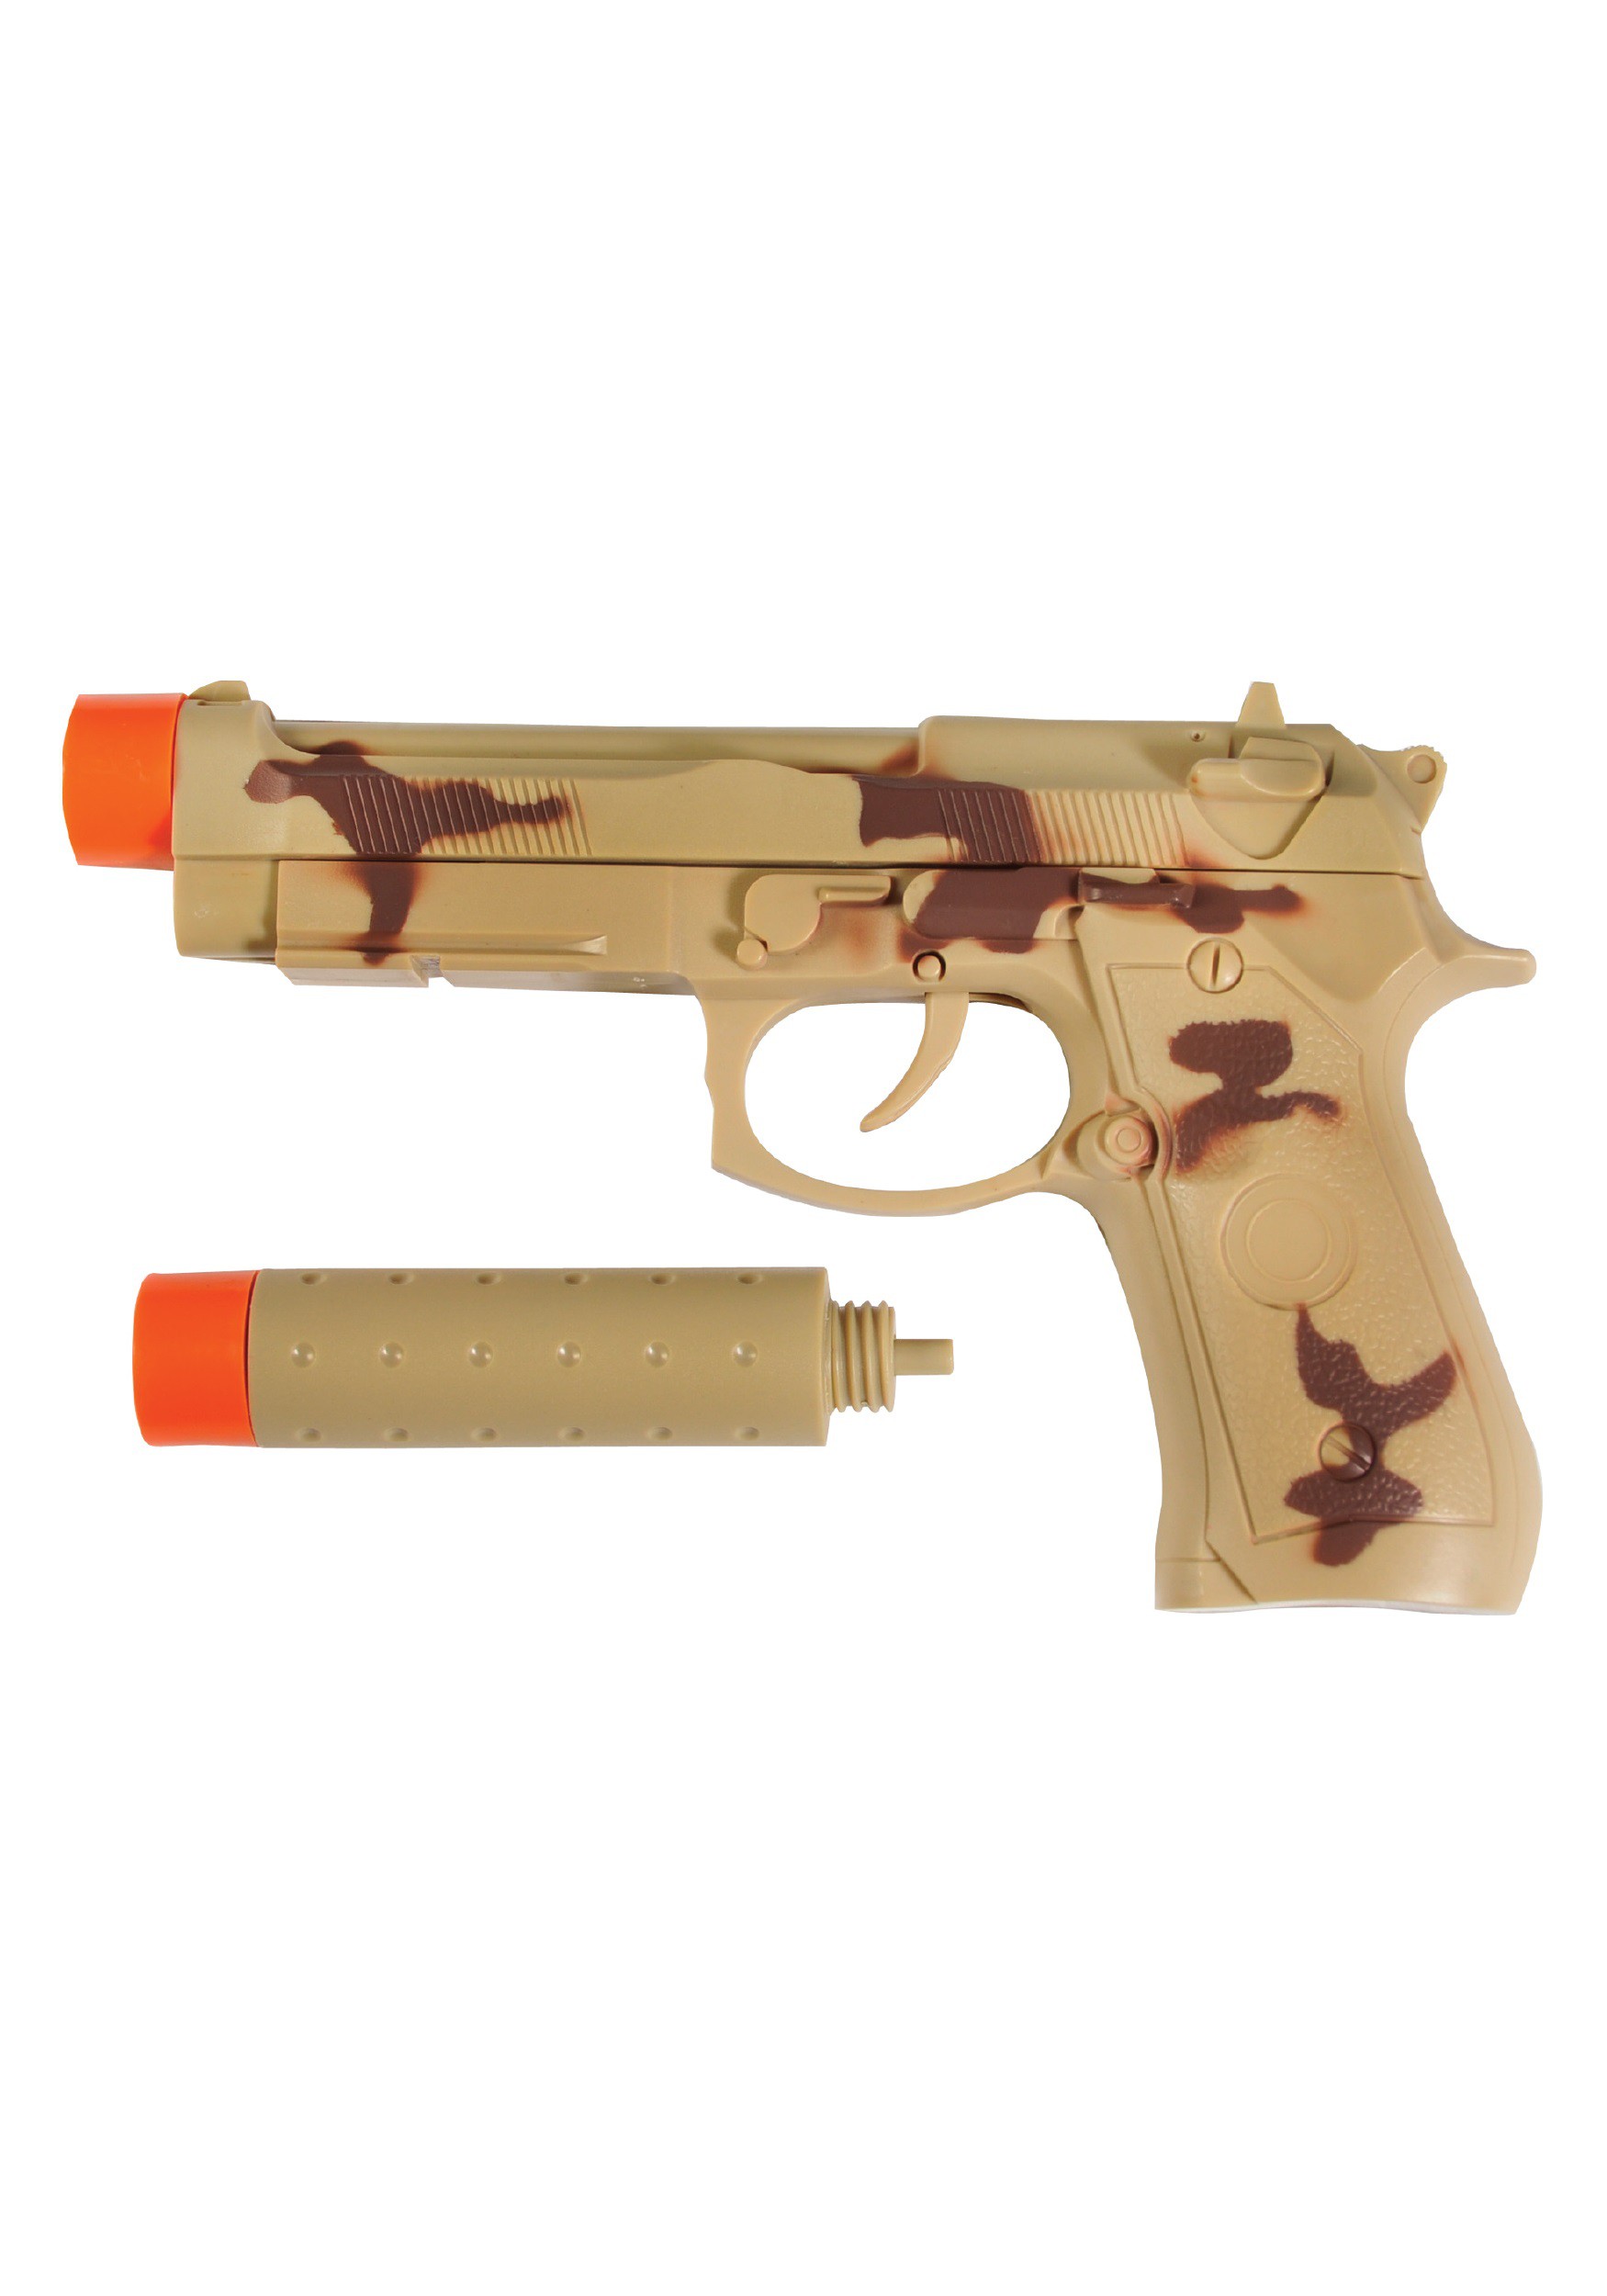 camouflage toy guns